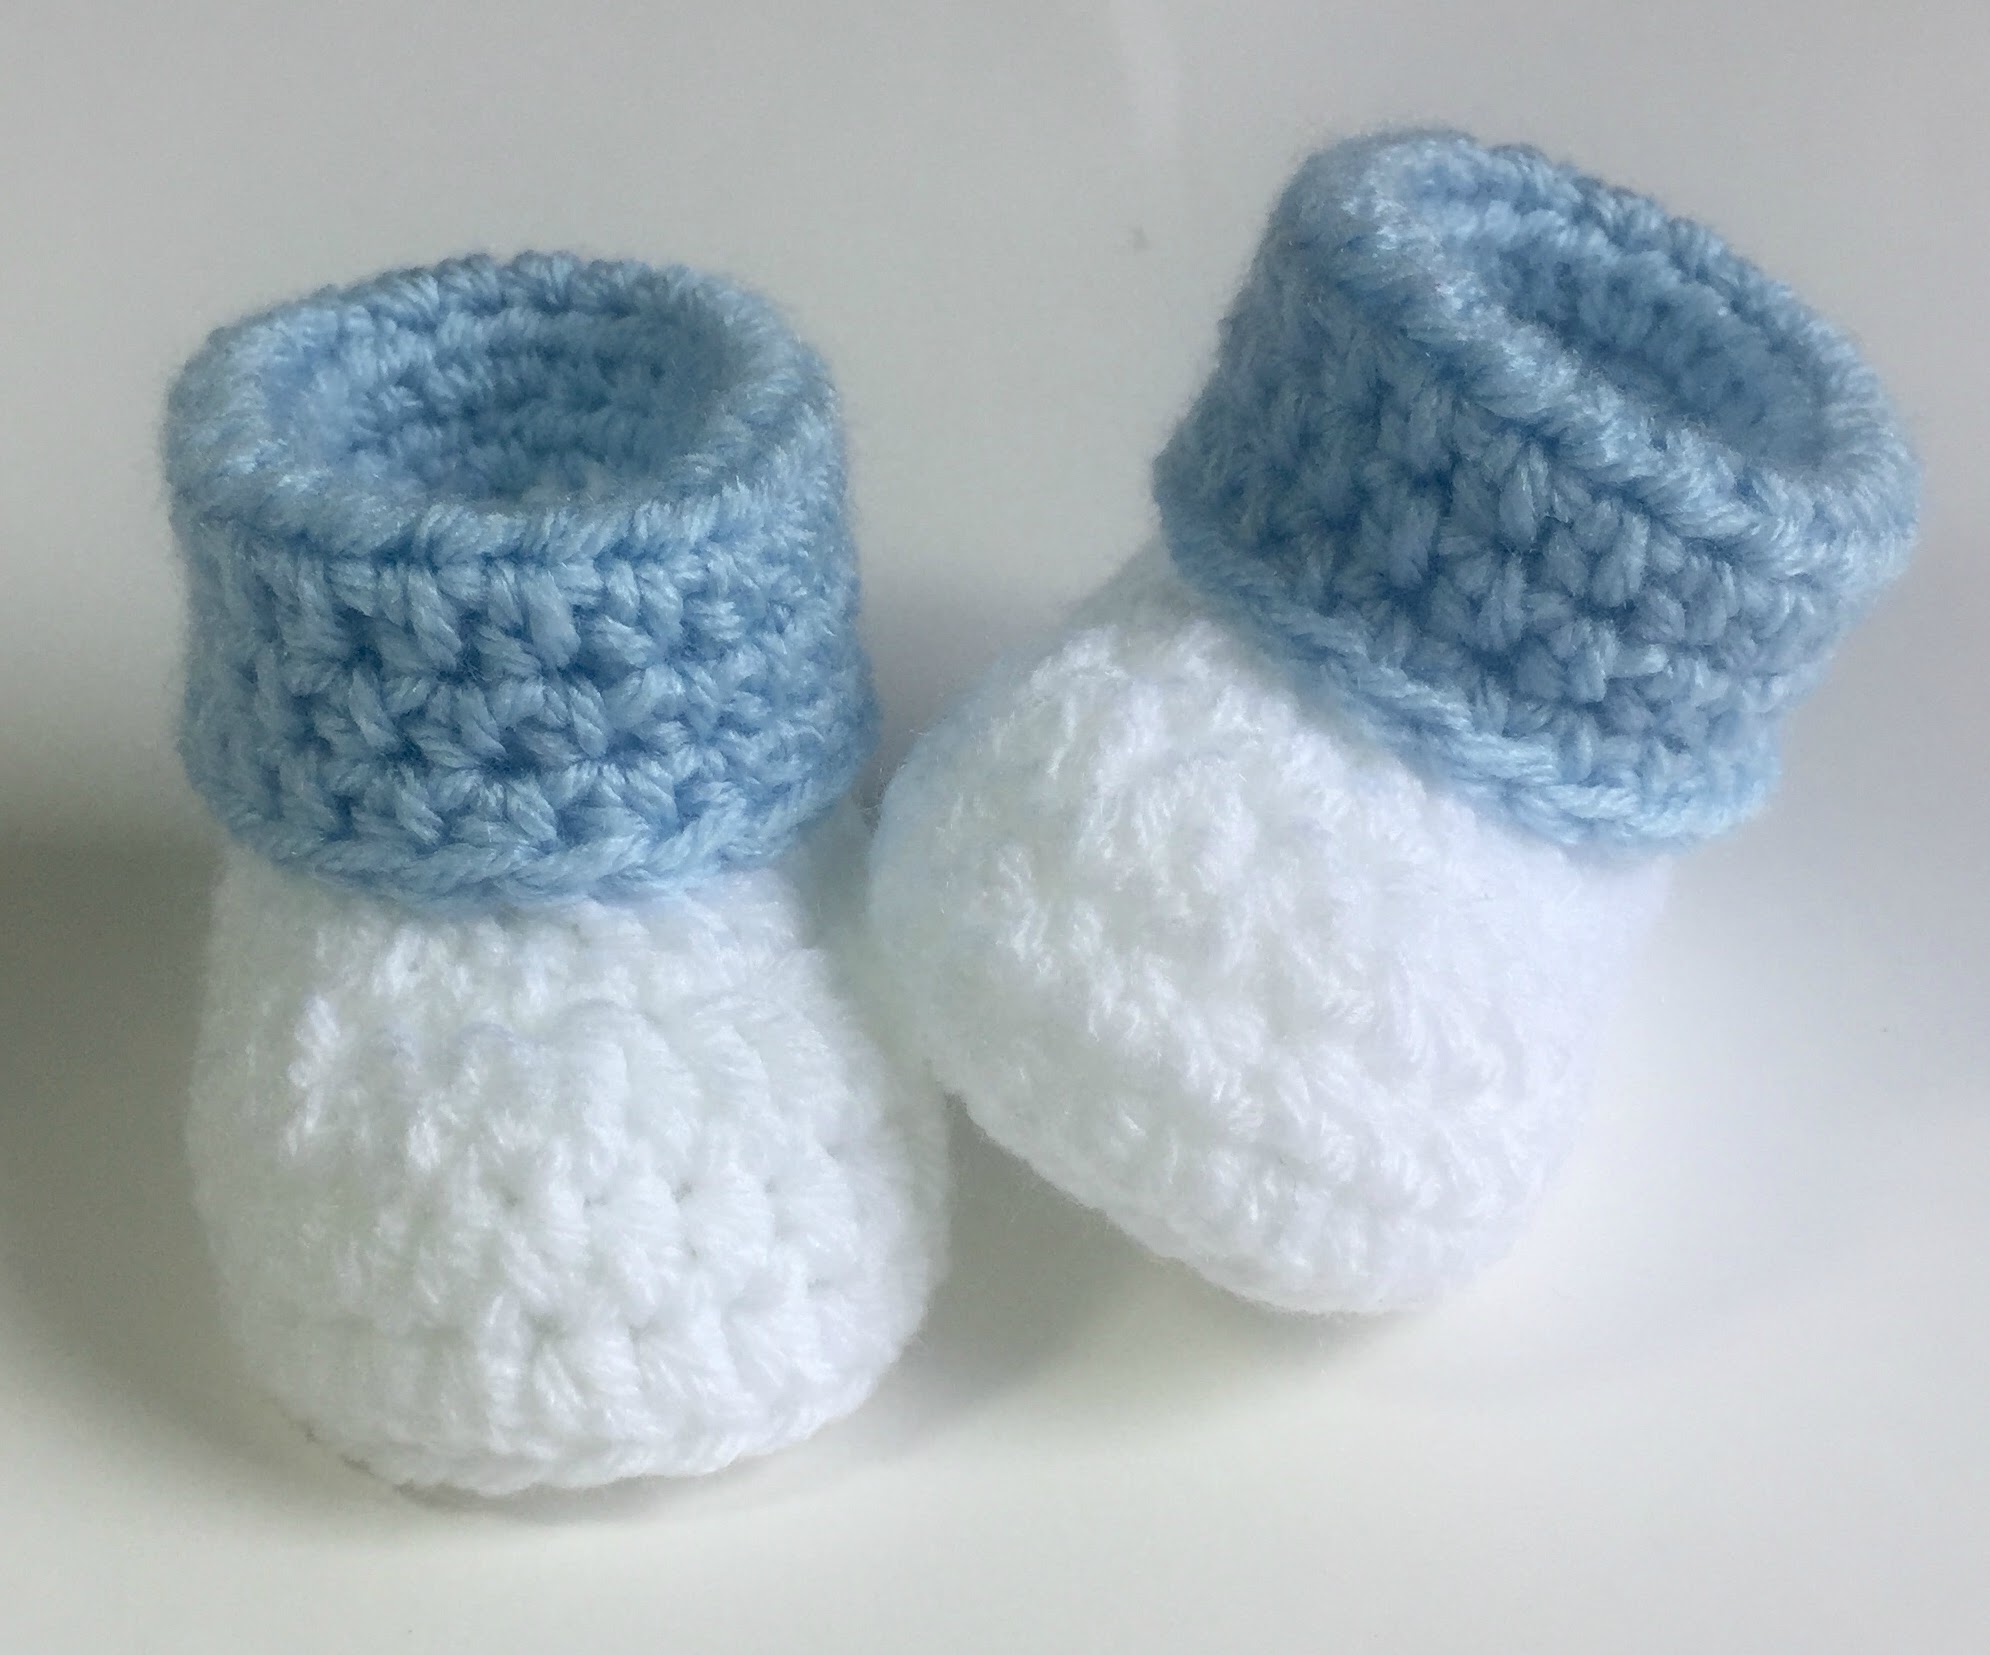 crochet-baby-booties-free-pattern-roundup-mallooknits